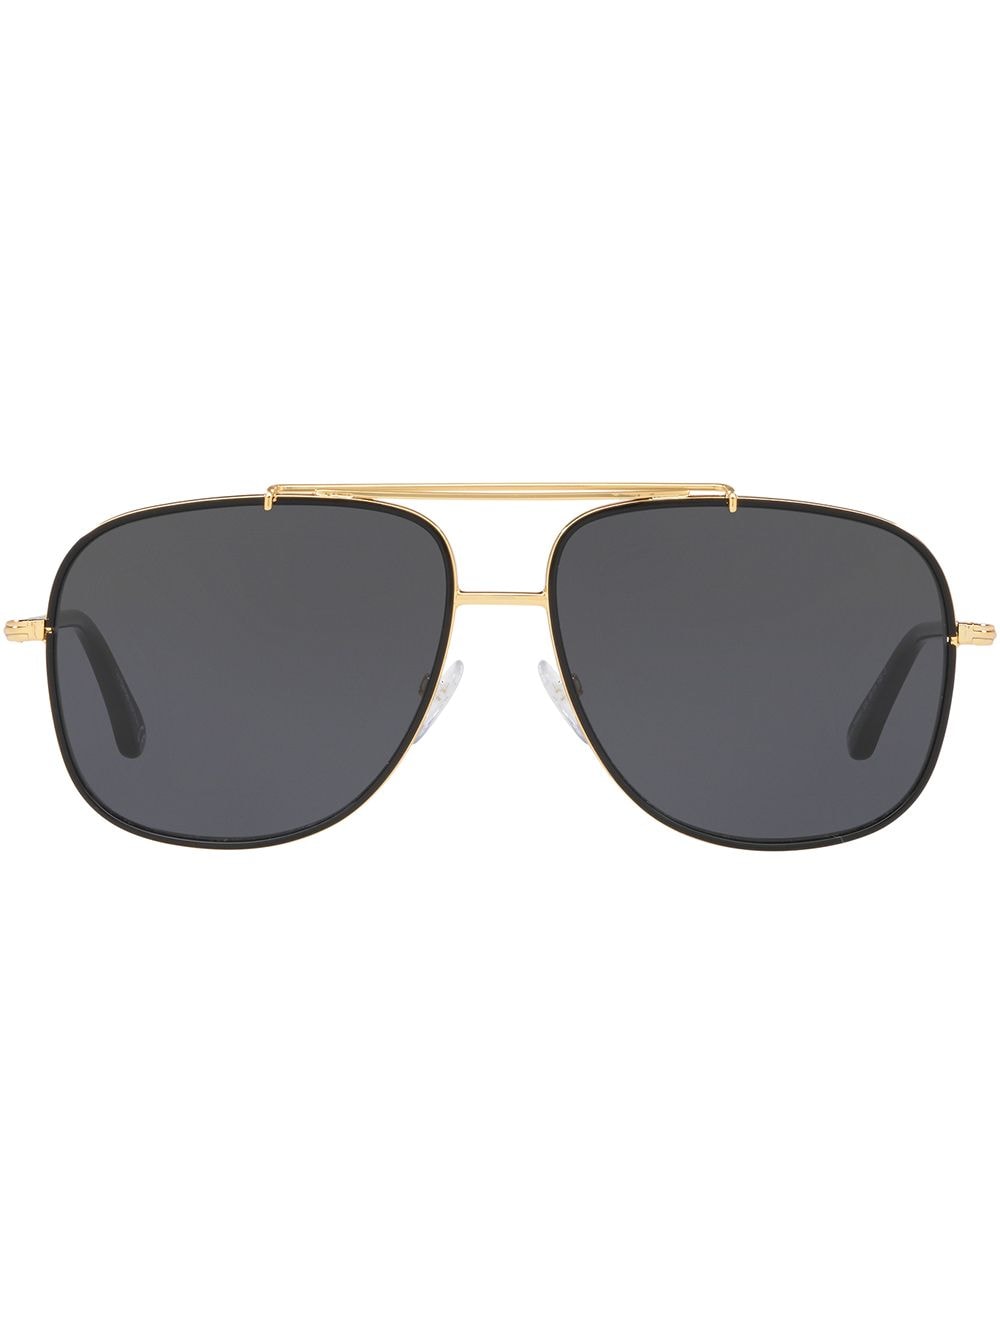 TOM FORD Eyewear FT0693 pilot-frame sunglasses - Gold von TOM FORD Eyewear